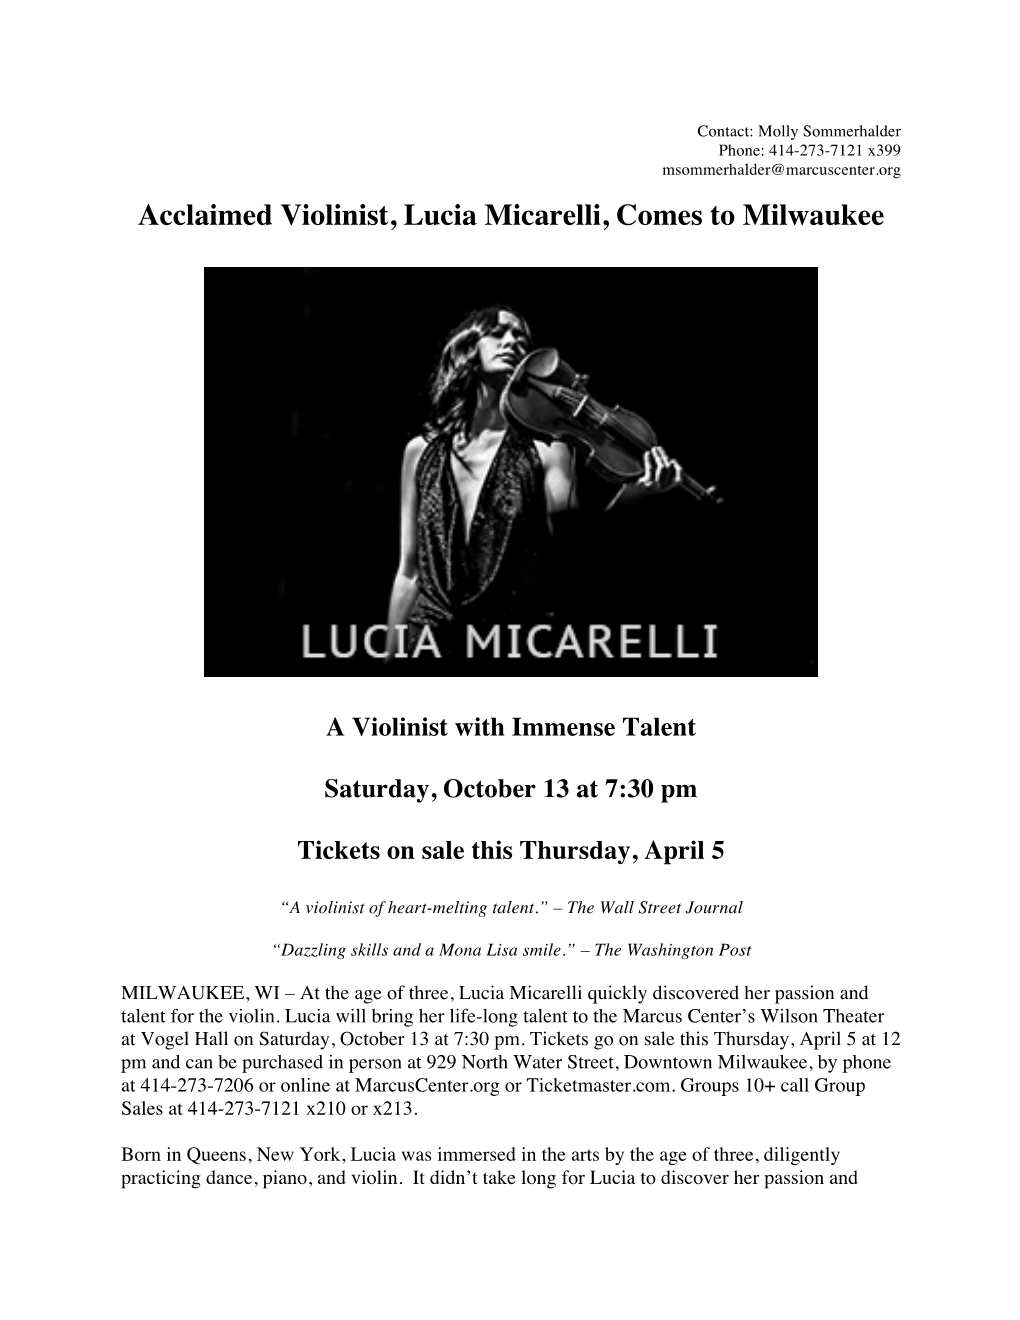 Acclaimed Violinist, Lucia Micarelli, Comes to Milwaukee